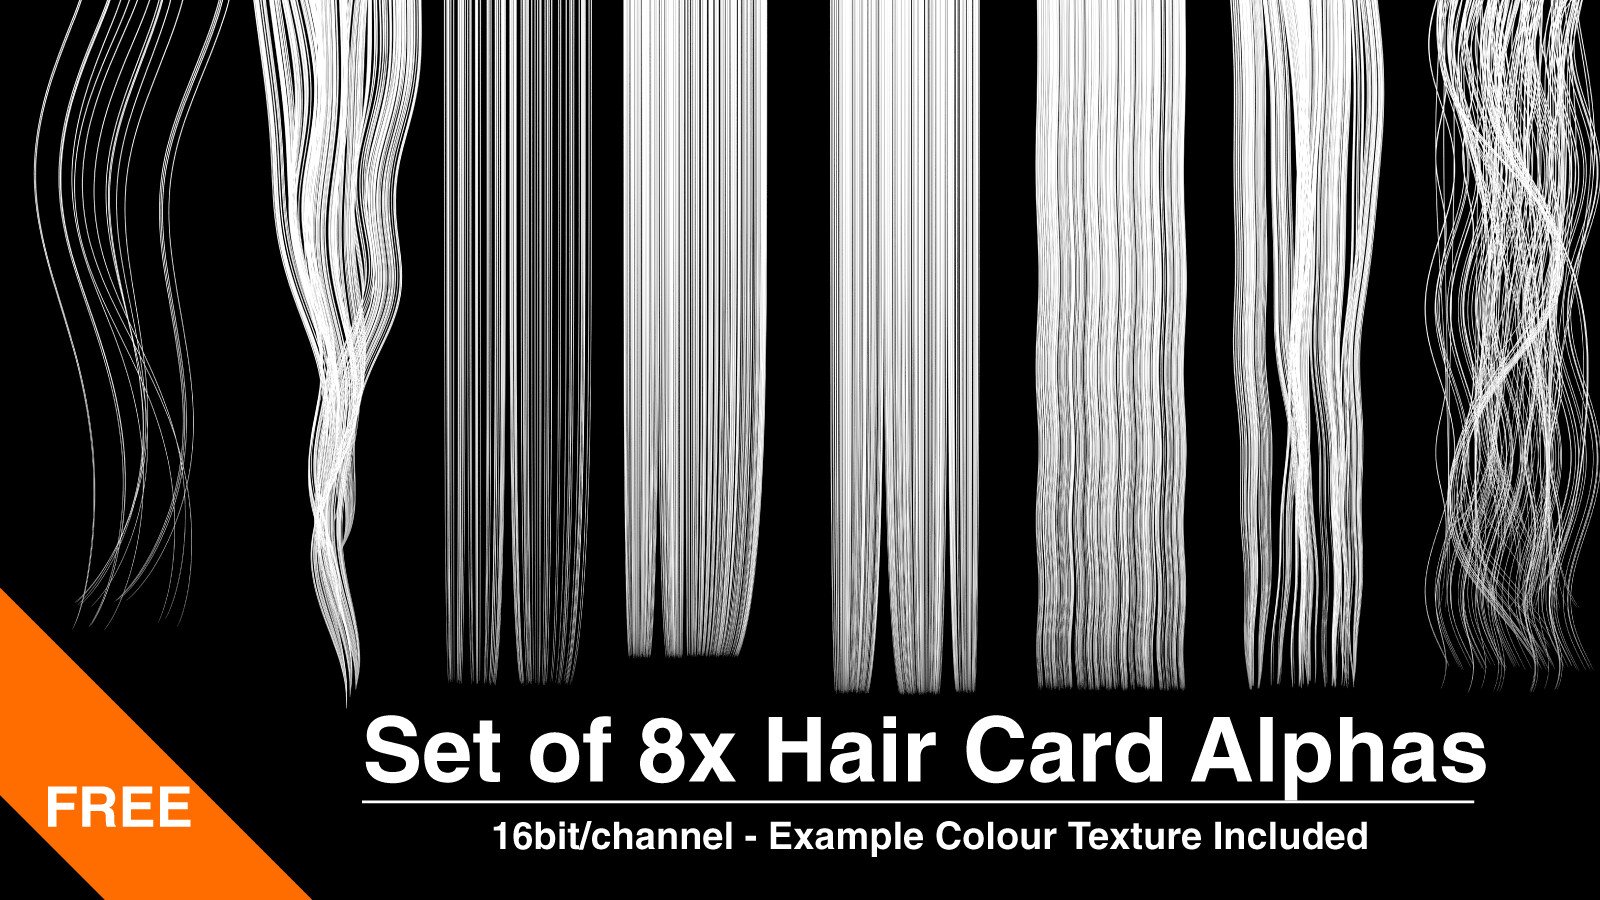 ArtStation - 8x Hair Card Alphas | Artworks